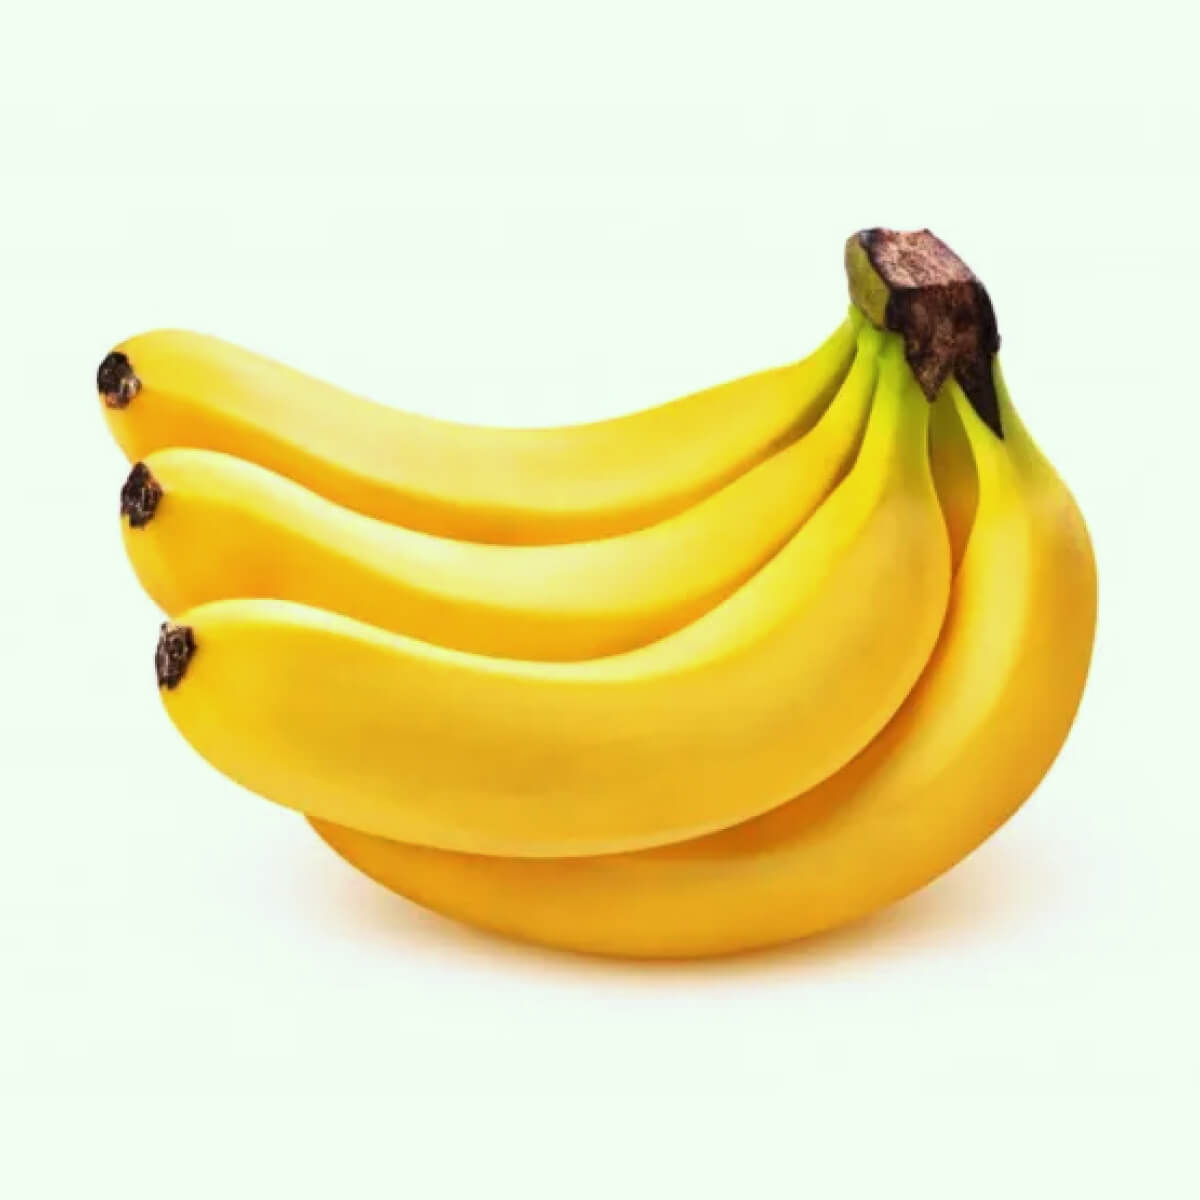 https://www.aboutfresh.org/wp-content/uploads/2021/11/bananas-green-tip@2x.jpg